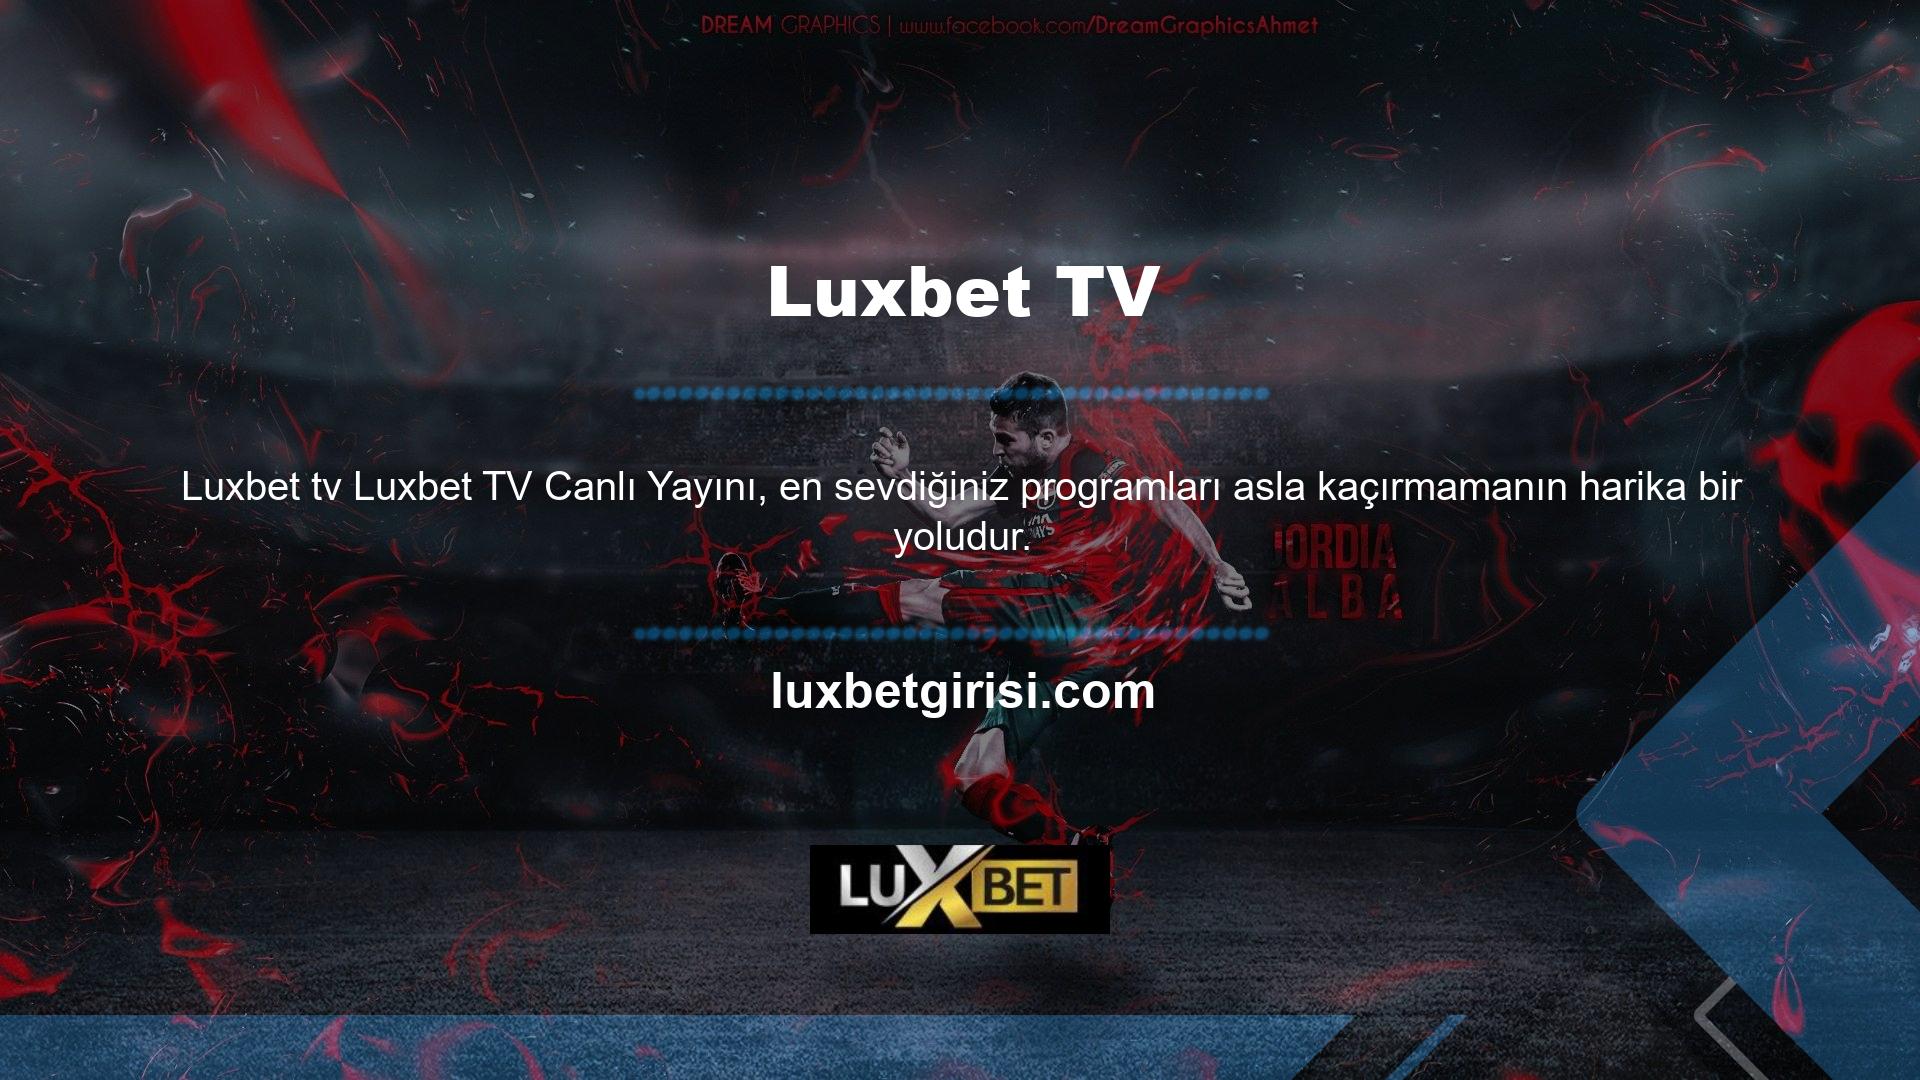 Luxbet TV